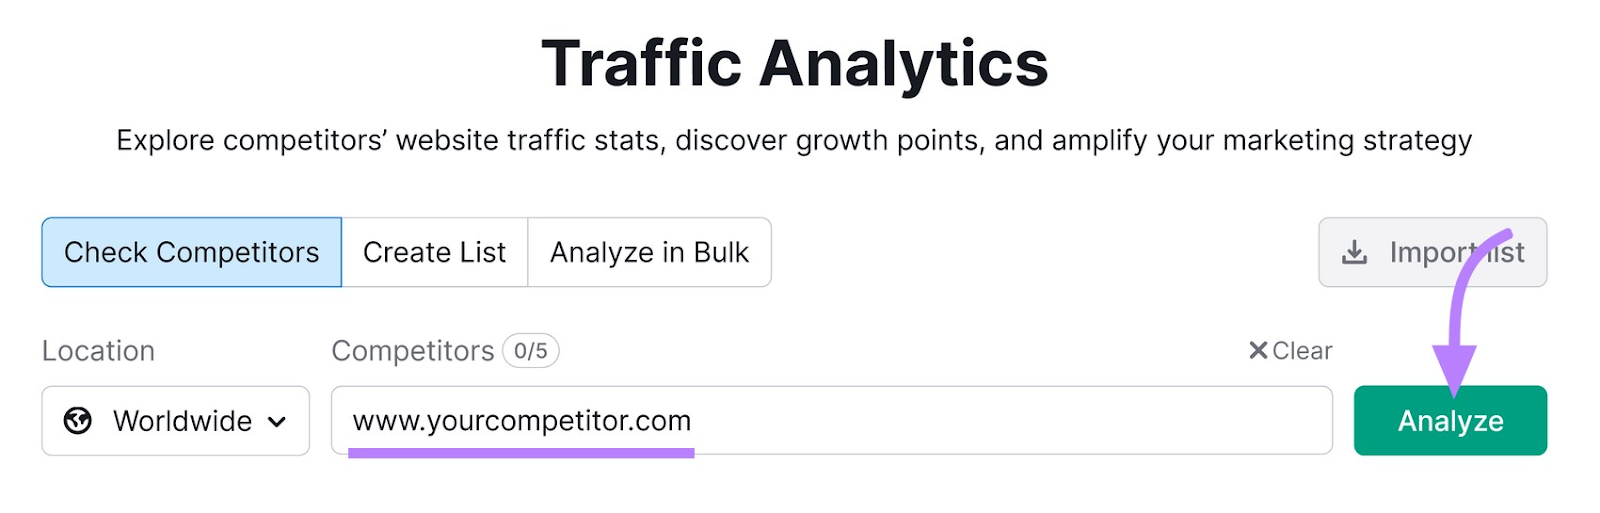 Traffic Analytics search bar